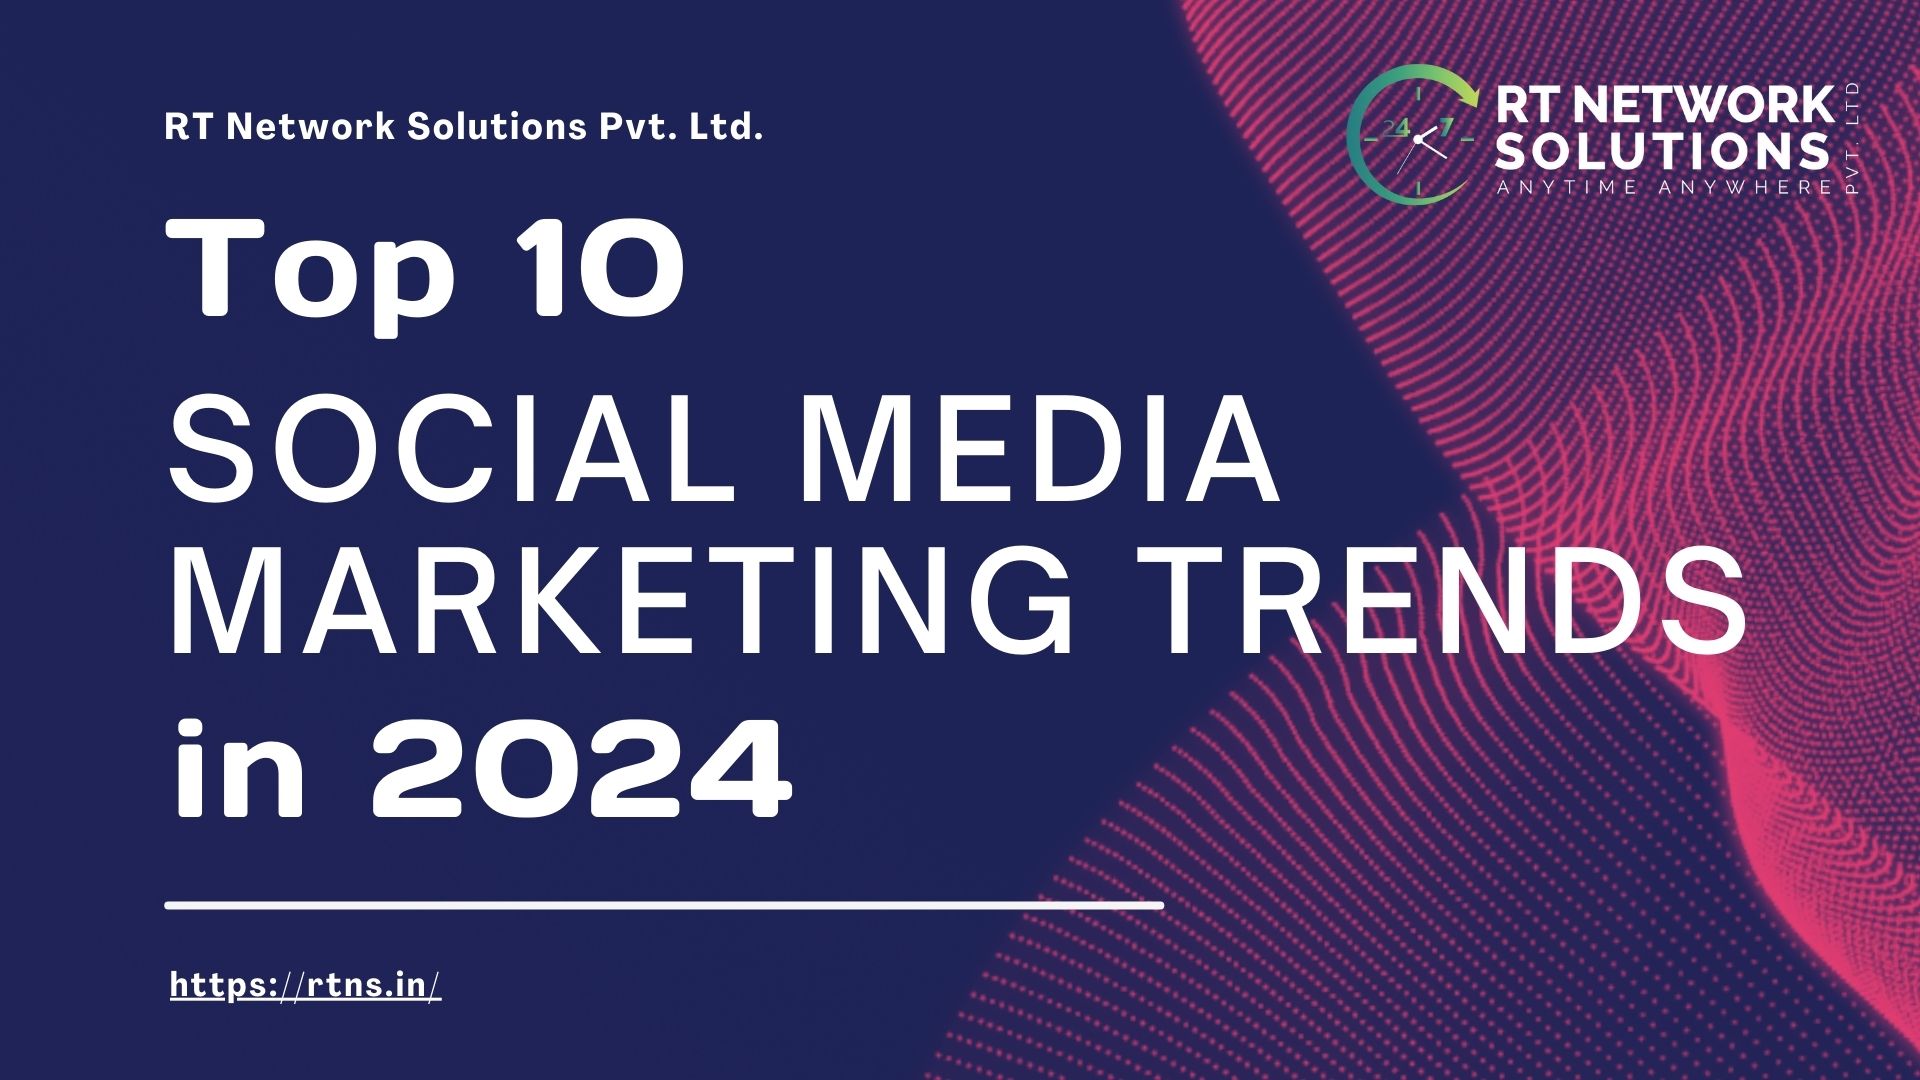 Social media marketing trends in 2024